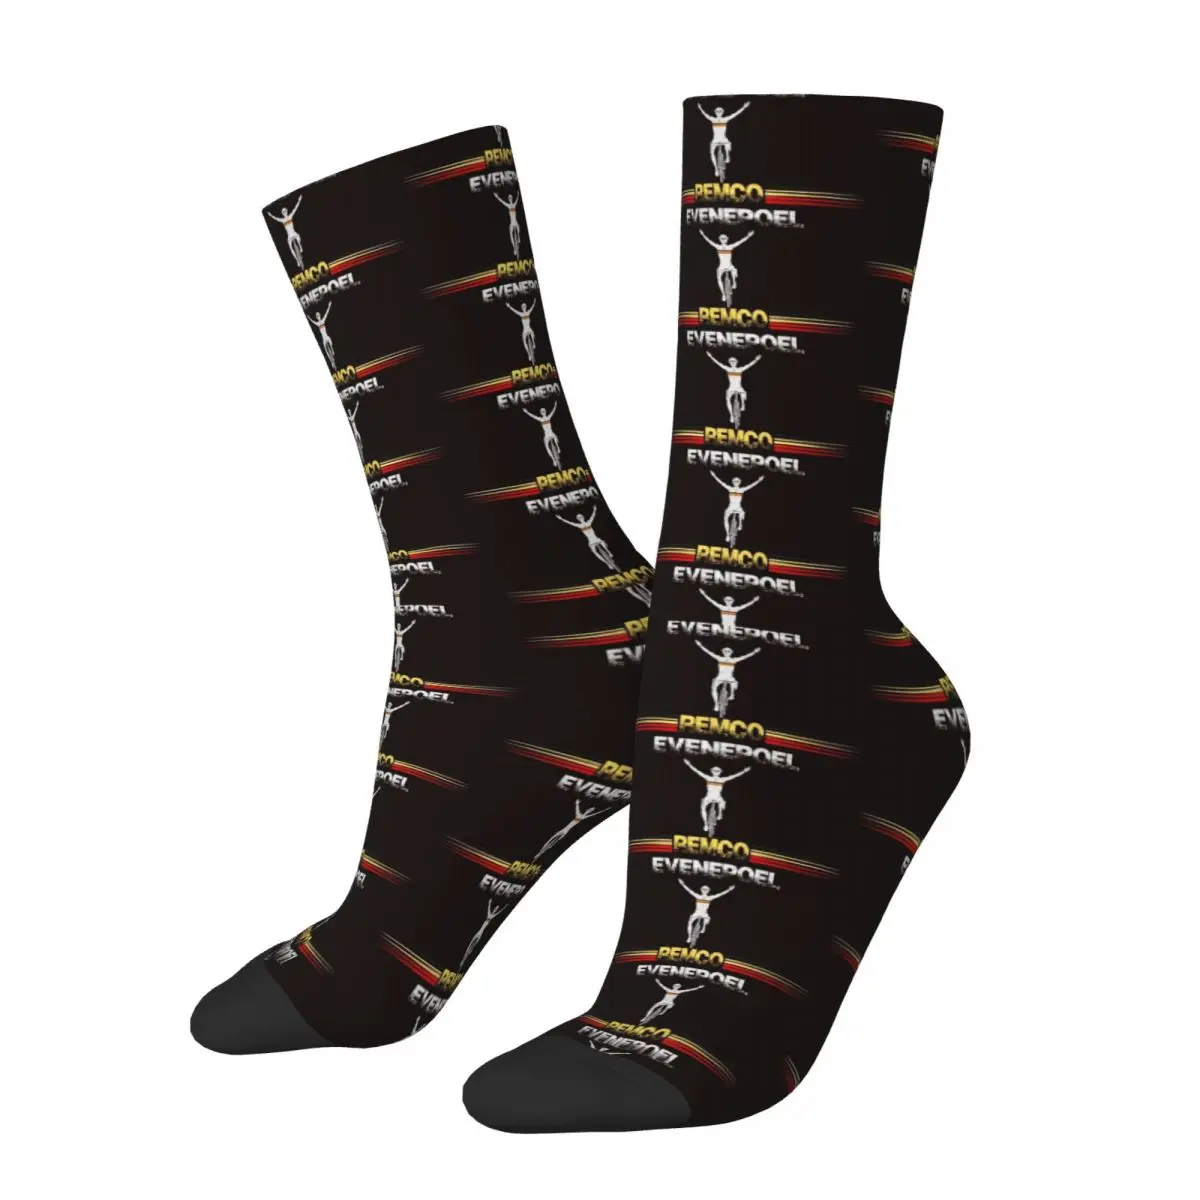 Cool Remco Evenepoel Socks Print Cycling Socks Merch Comfortable Long Socks Non-slip Birthday Present for Unisex